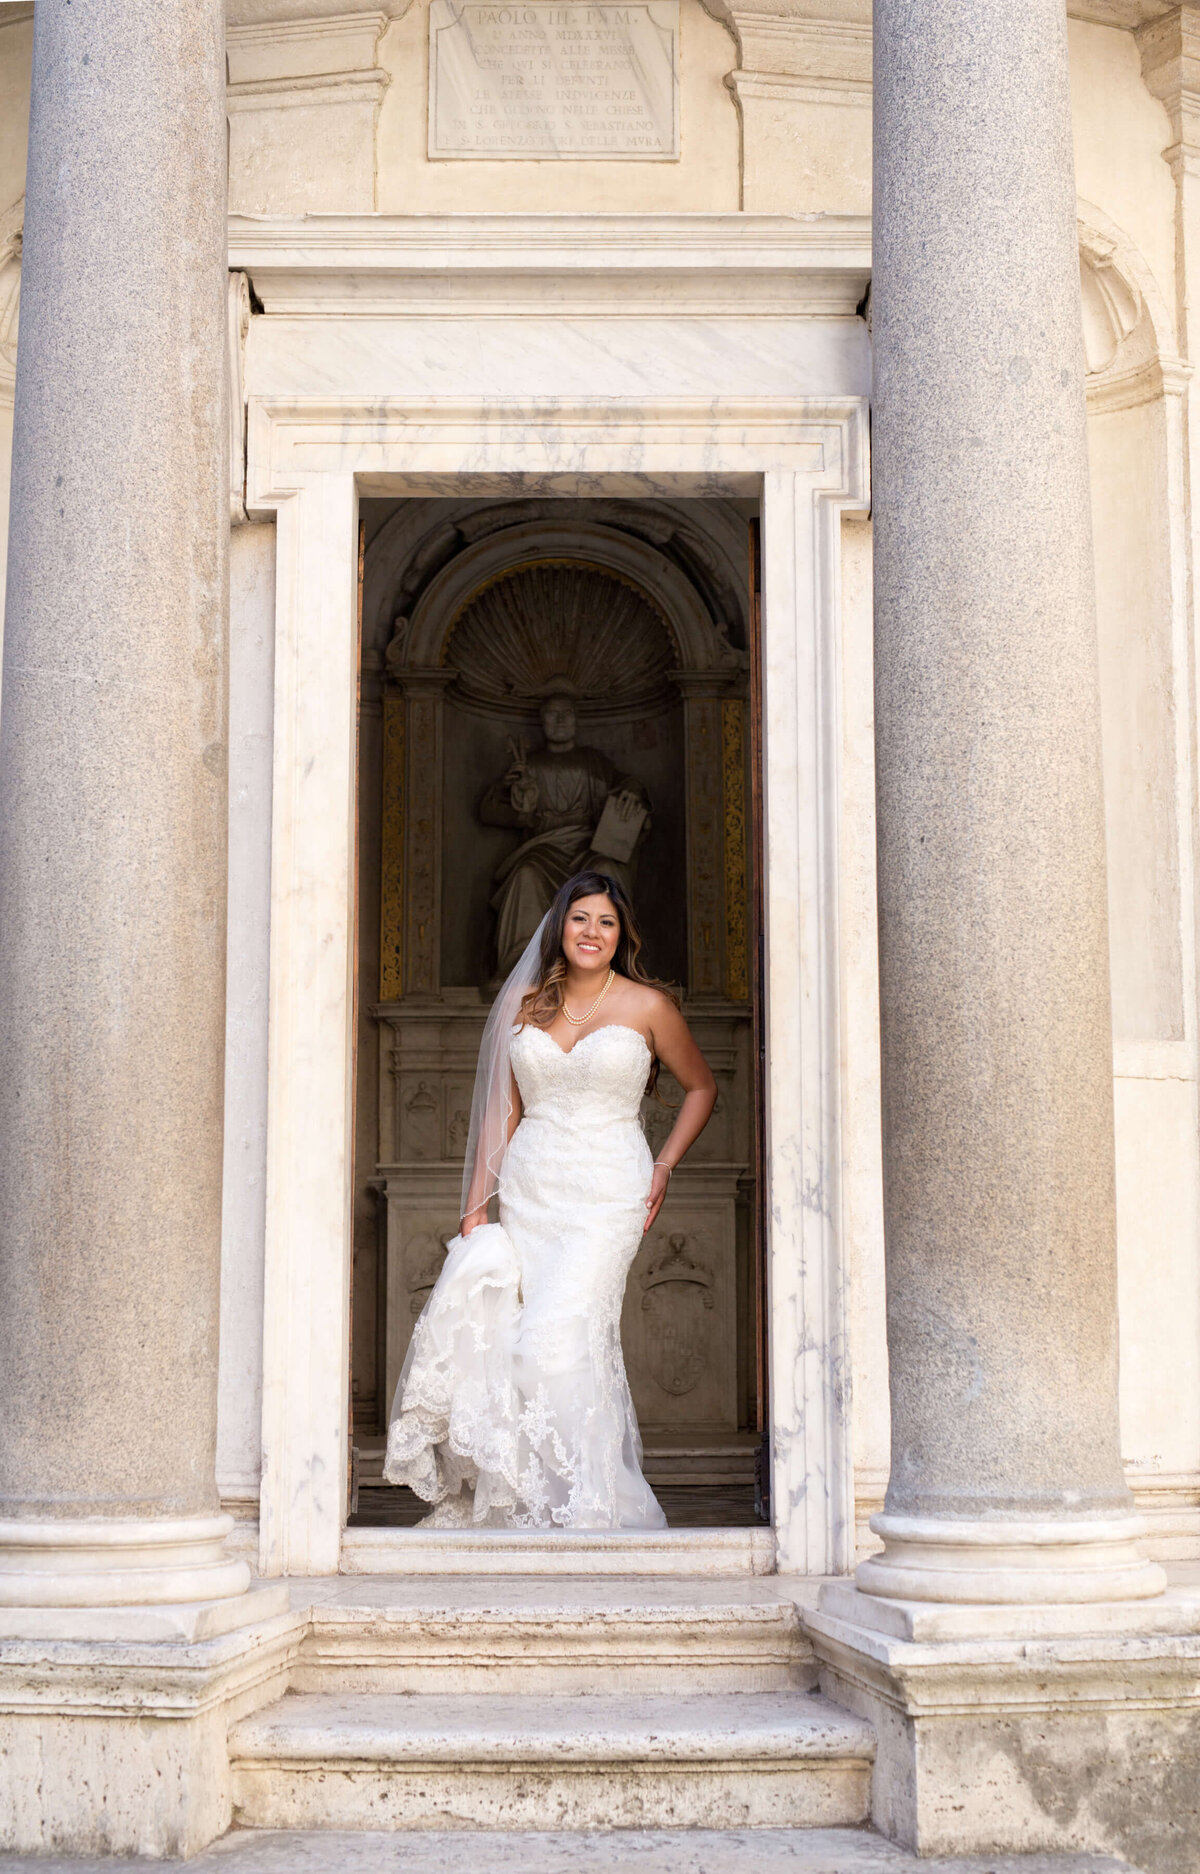 Wedding L&J - Rome - Italy 2016 17